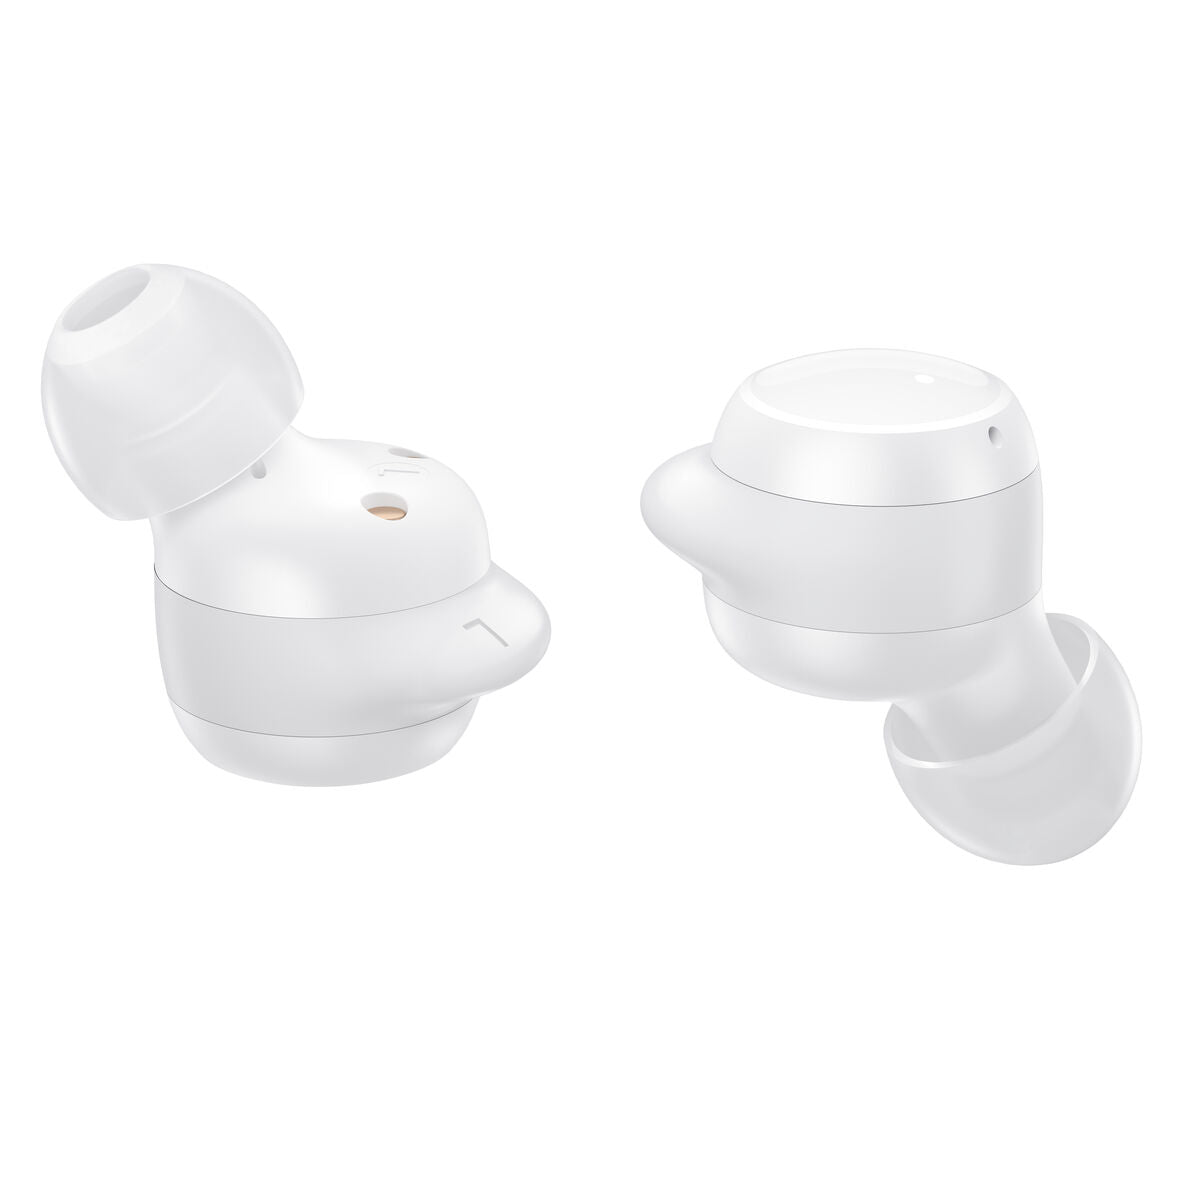 Bluetooth Headphones Xiaomi XM500030 White (Refurbished A)